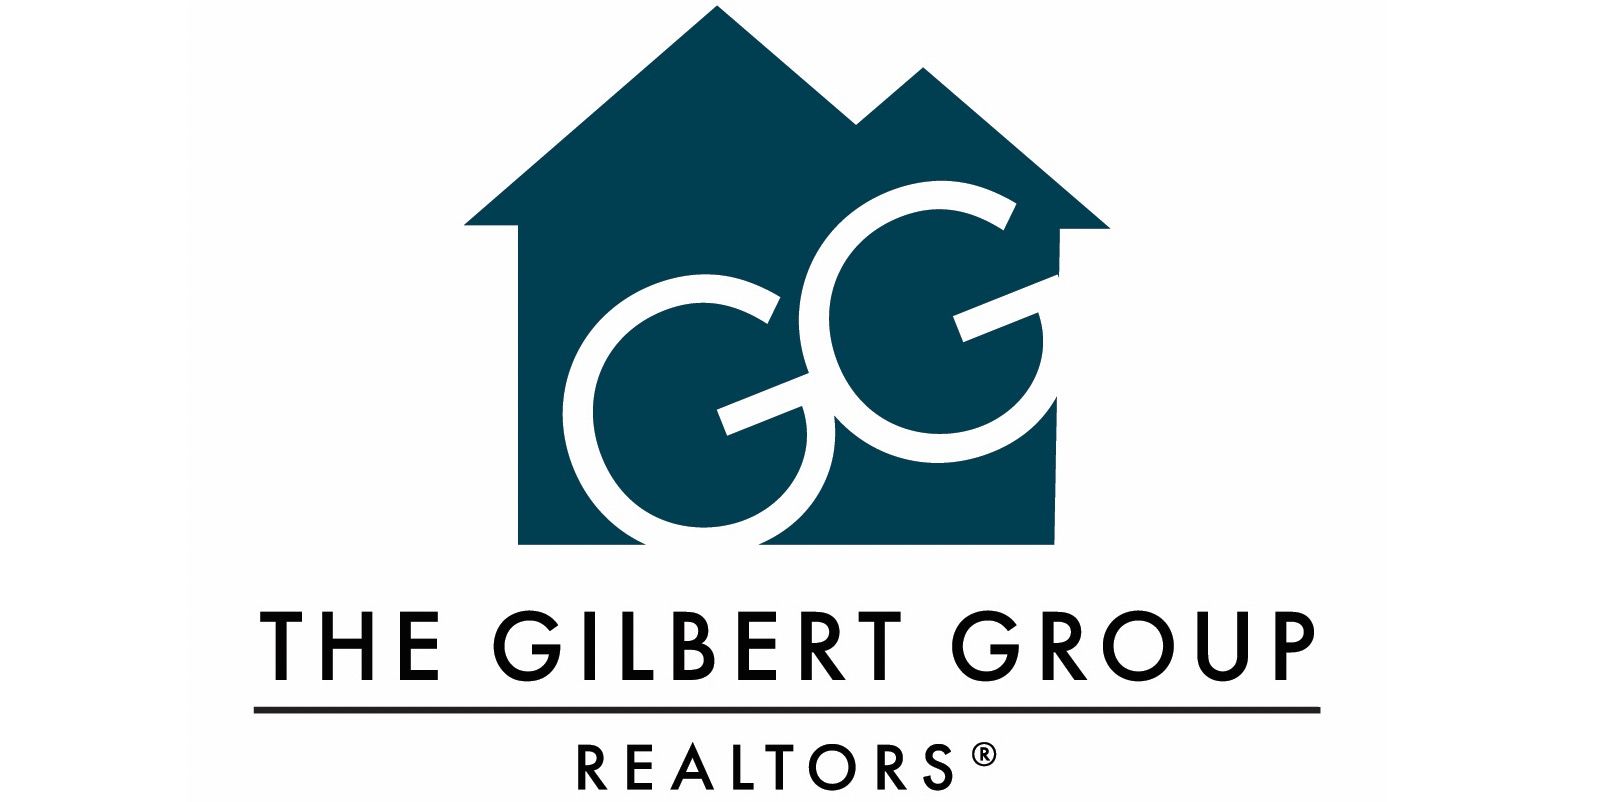 Highgarden Real Estate - The Gilbert Group